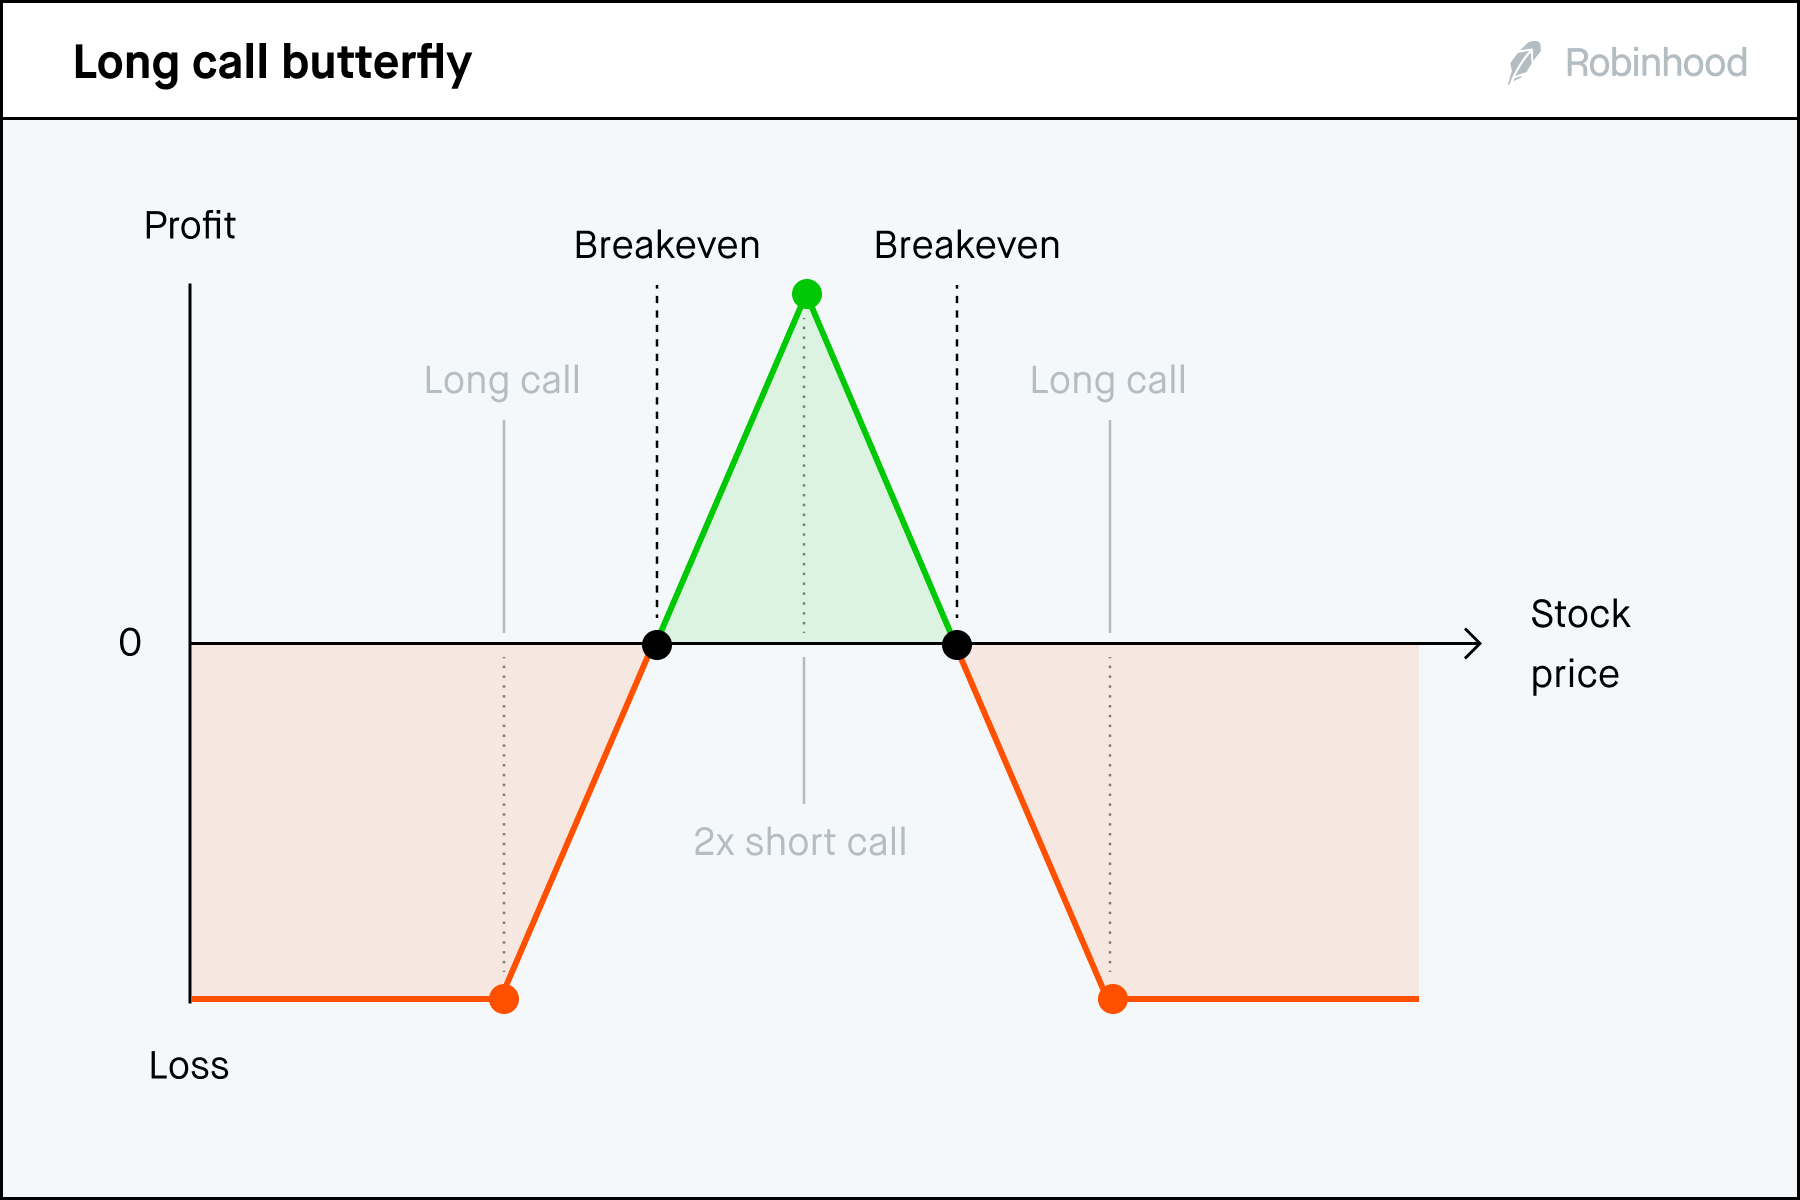 Long call butterfly P/L chart 3x